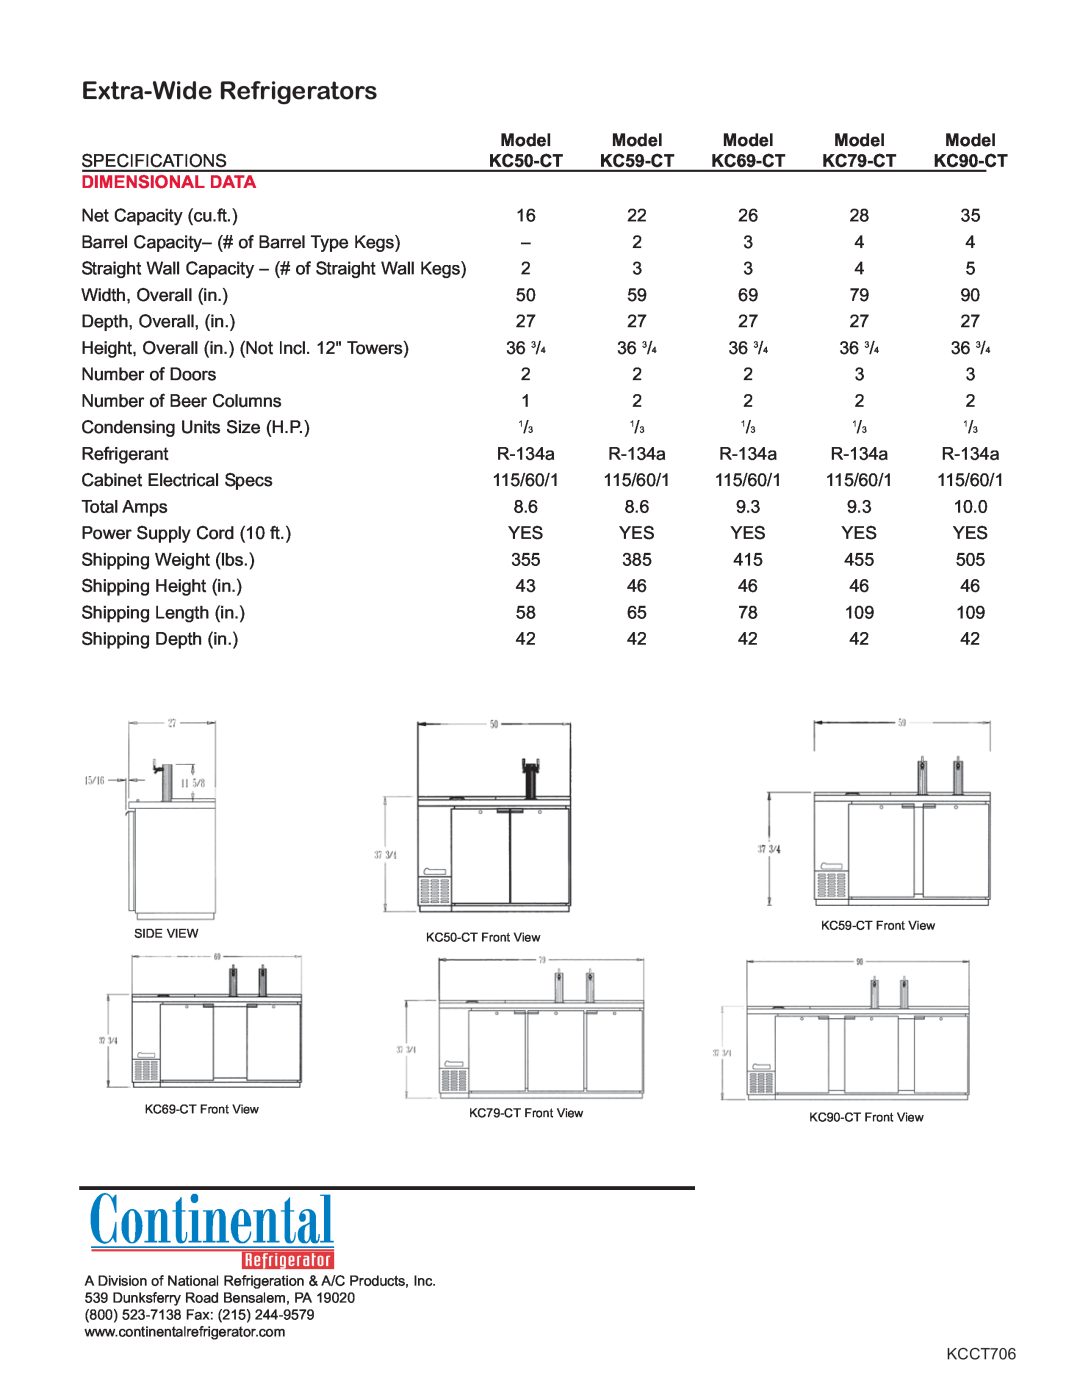 Continental Refrigerator KC59-CT Extra-WideRefrigerators, Model, KC50-CT, KC69-CT, KC79-CT, KC90-CT, Dimensional Data 